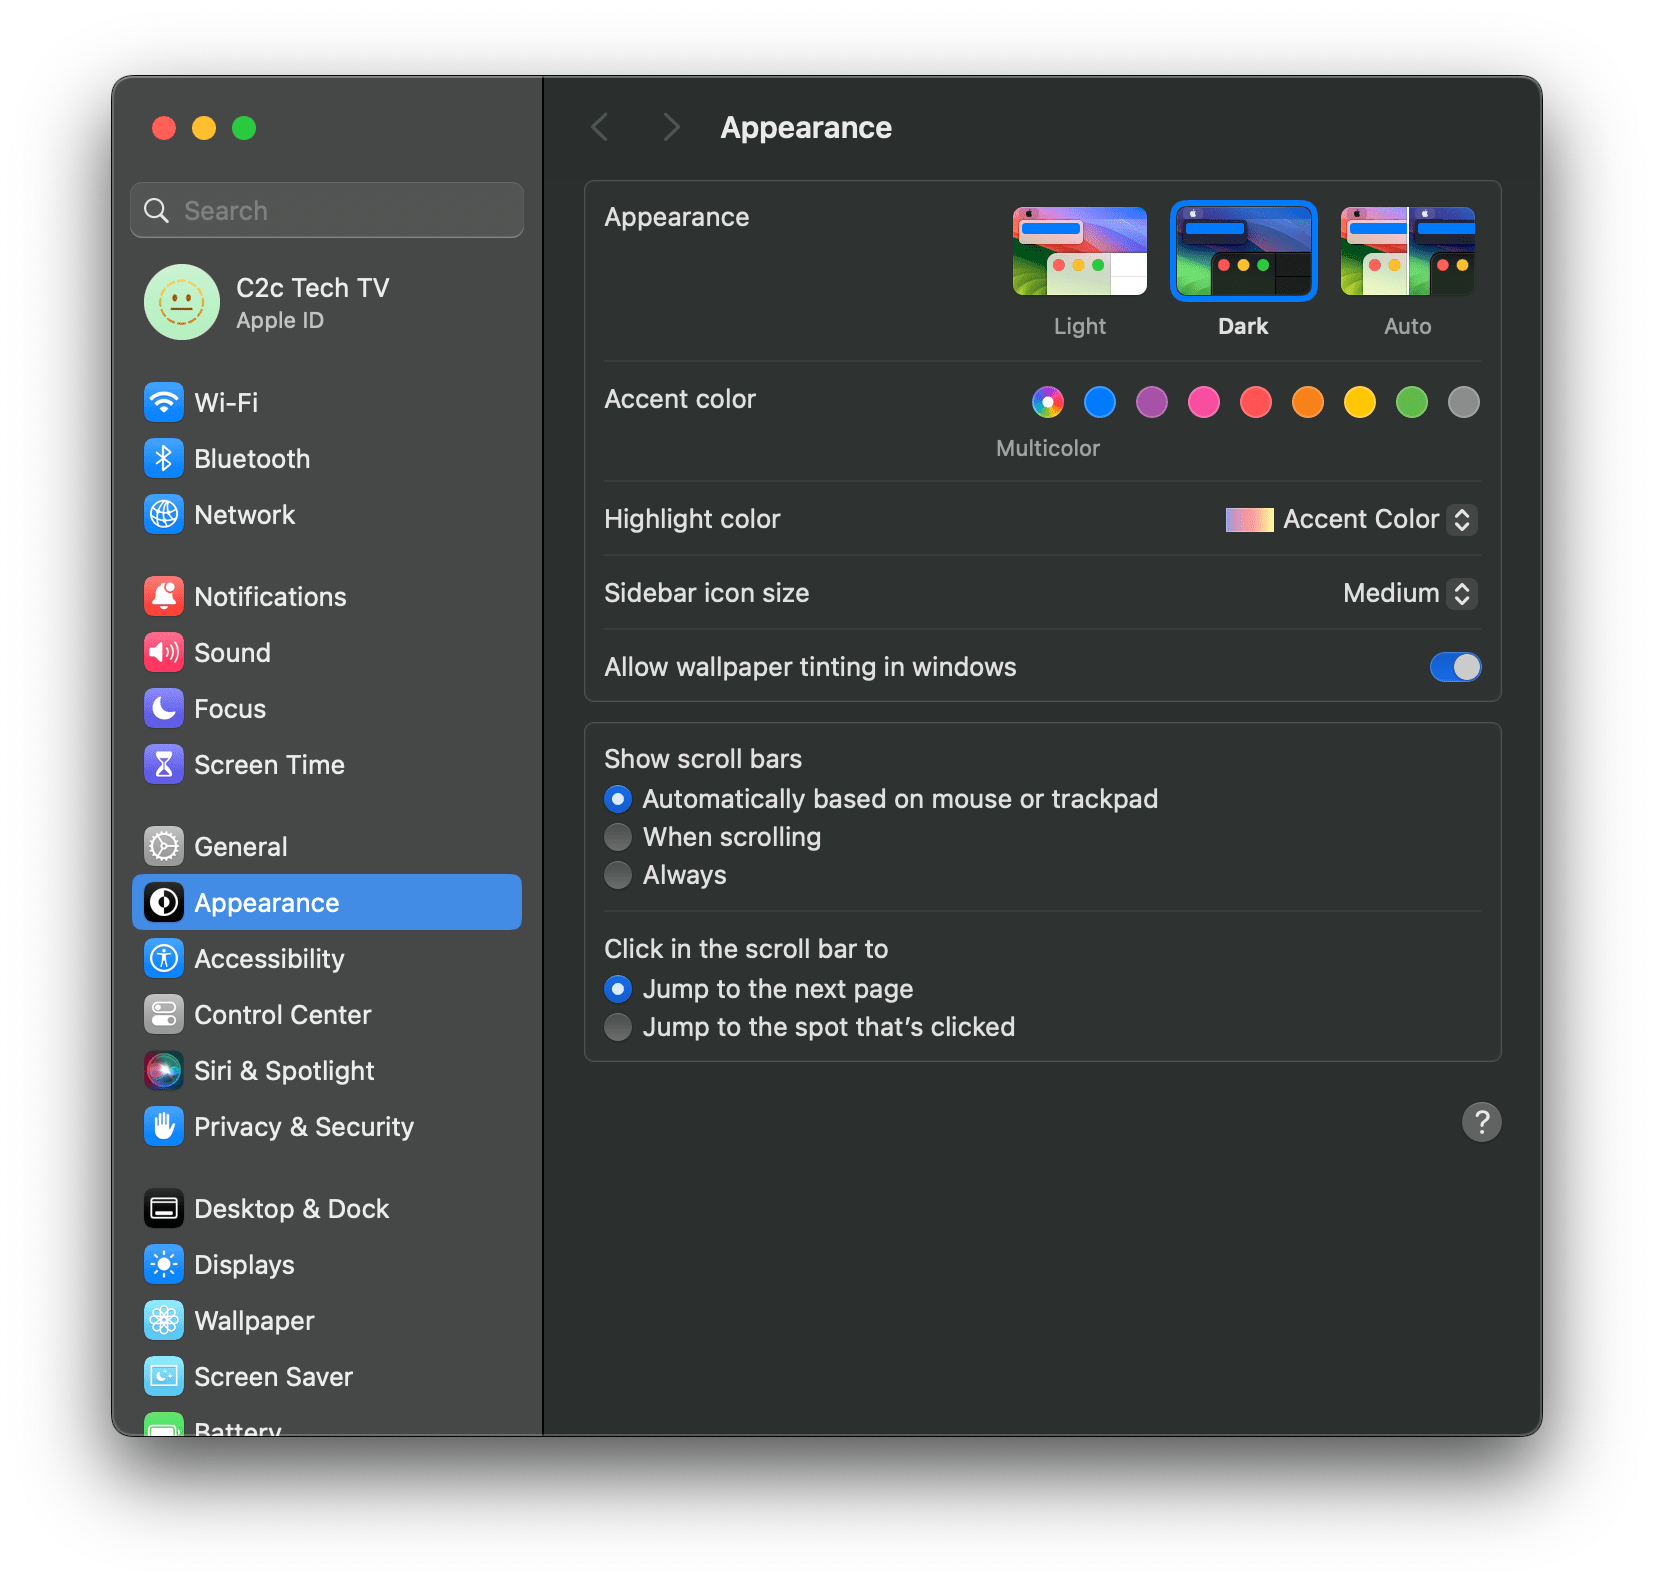 macOS Sonoma Sidebar icon size Medium